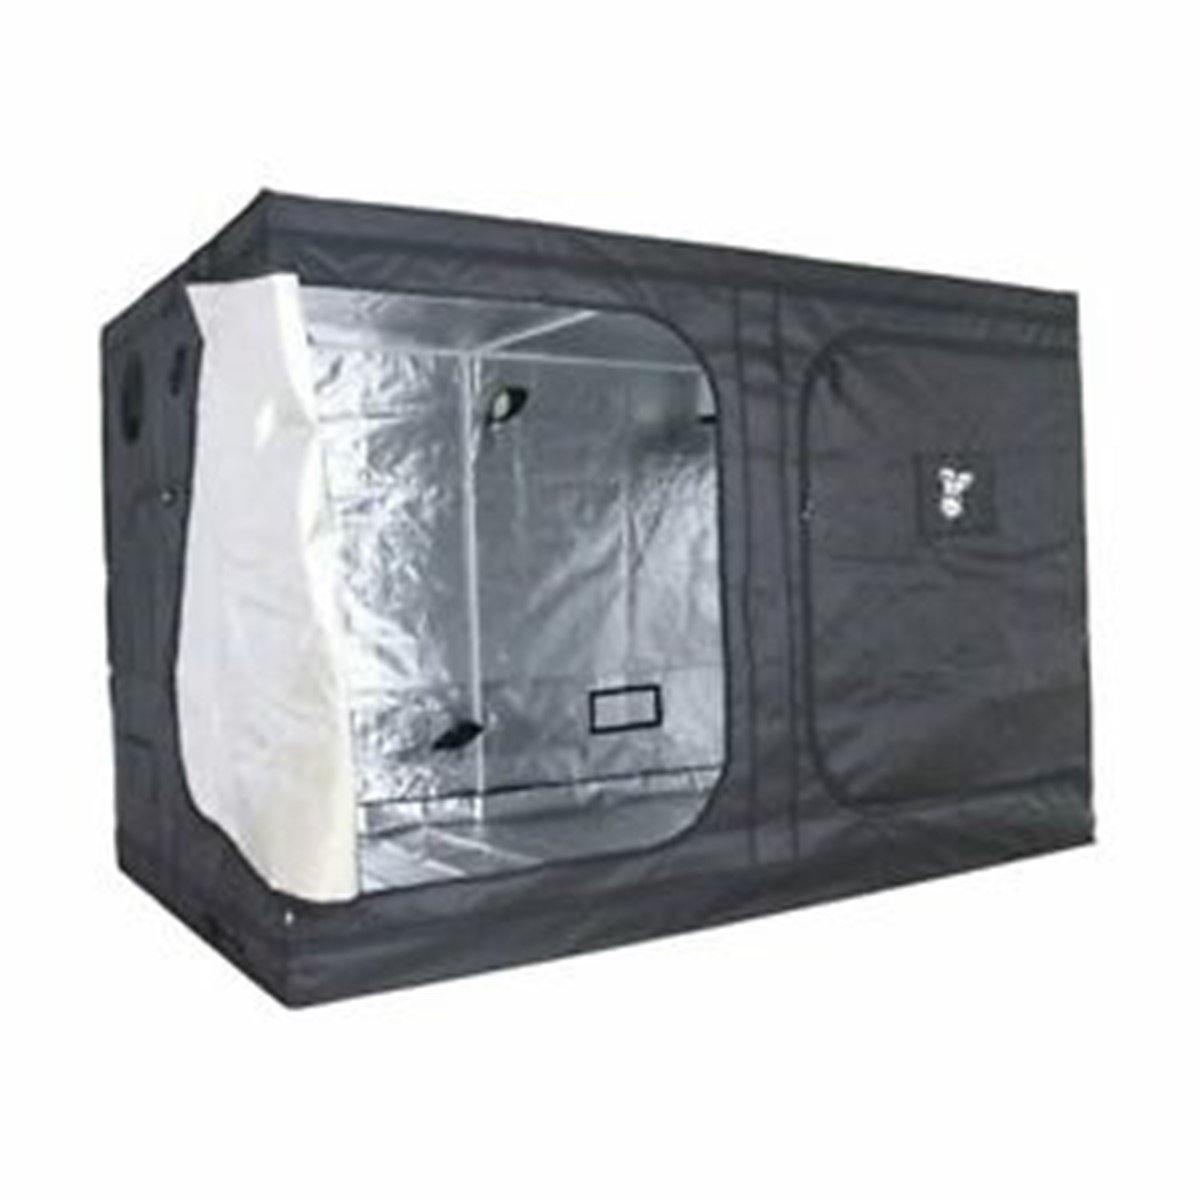 Gorilla Box Grow Tent | Buy Indoor Grow Tents For Hydroponics | Top Yield Hydroponics